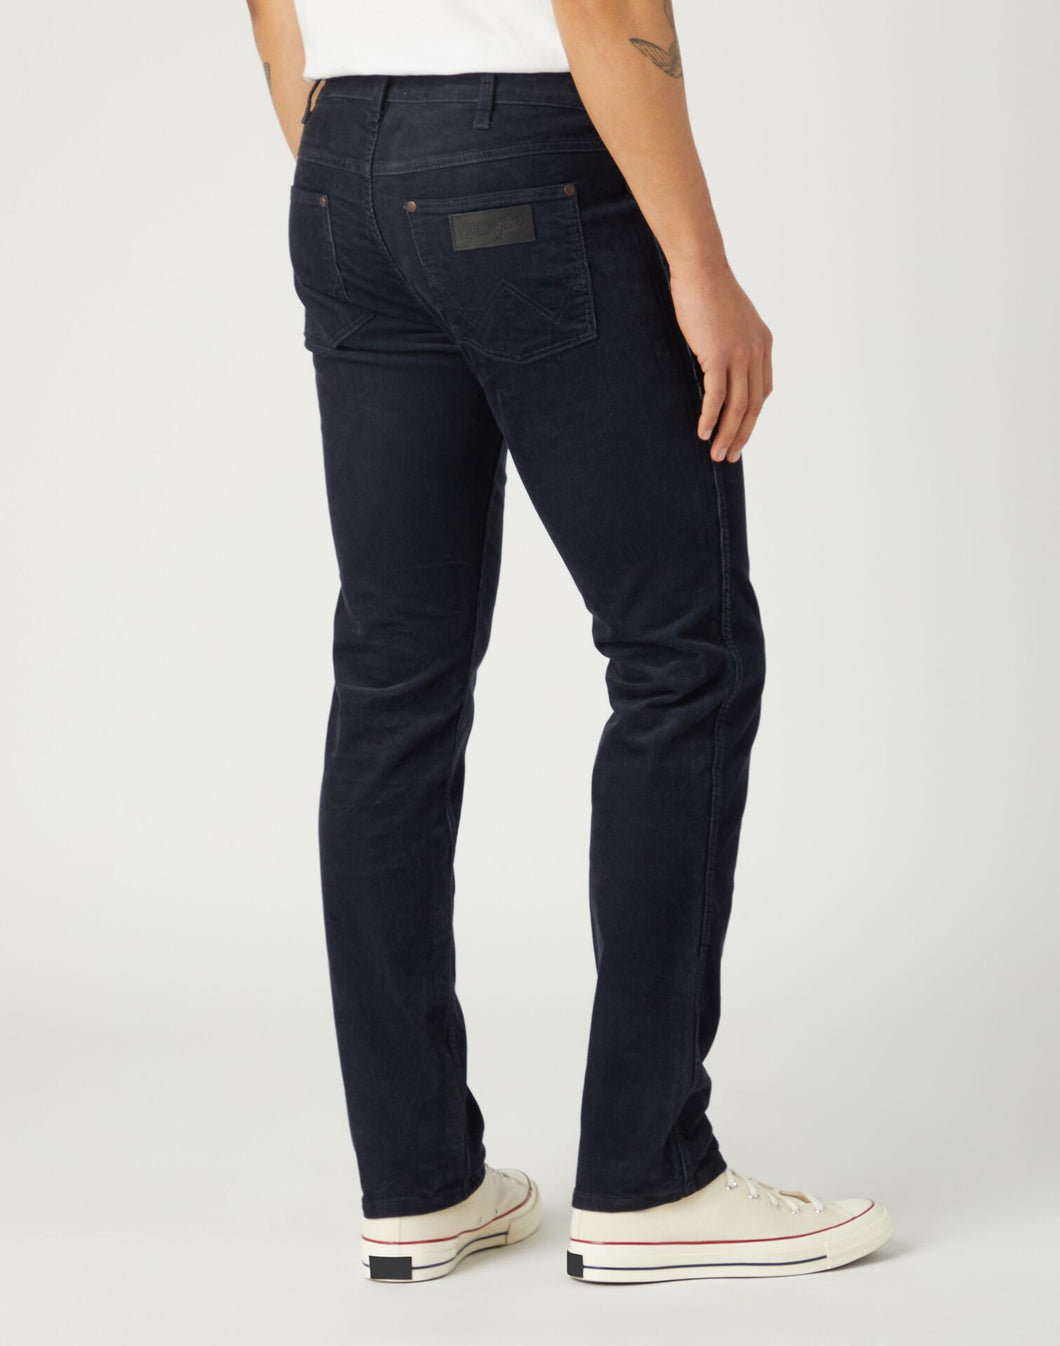 Wrangler navy cord jeans